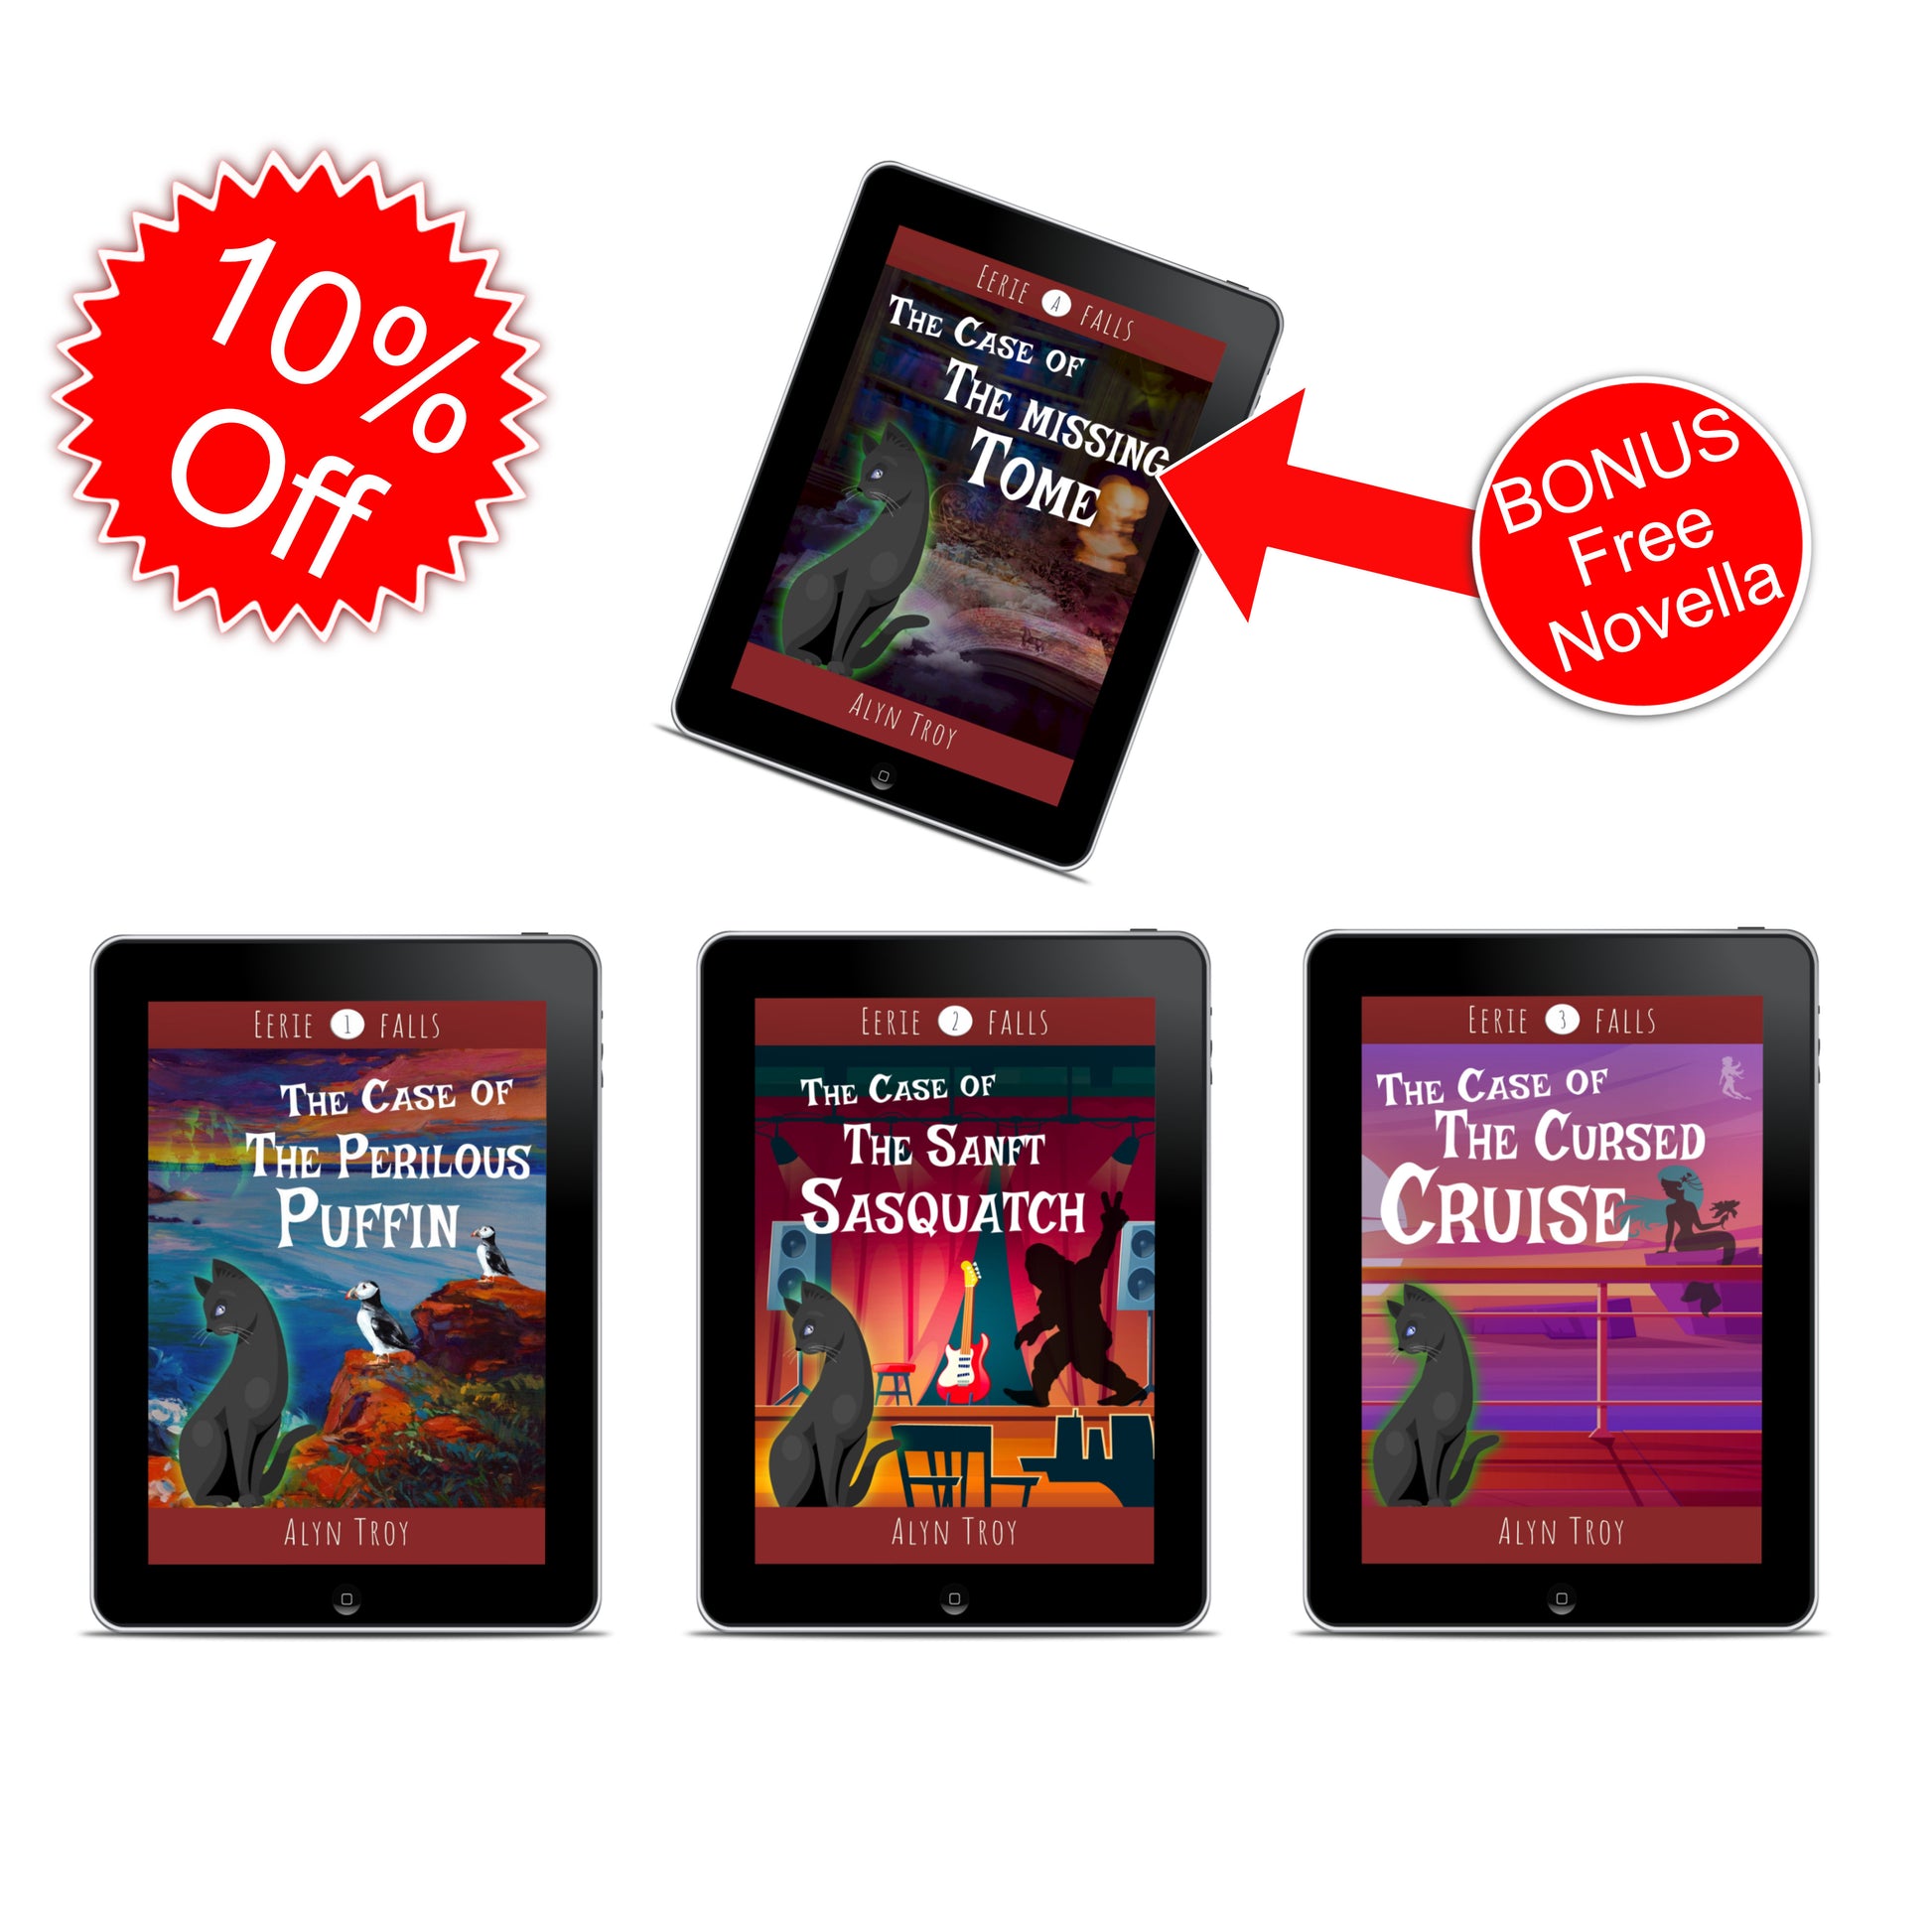 Save 10% off three ebooks: Perilous Puffin, Sanft Sasquatch, and Cursed Cruise. Bonus free novella ebook Missing tome.